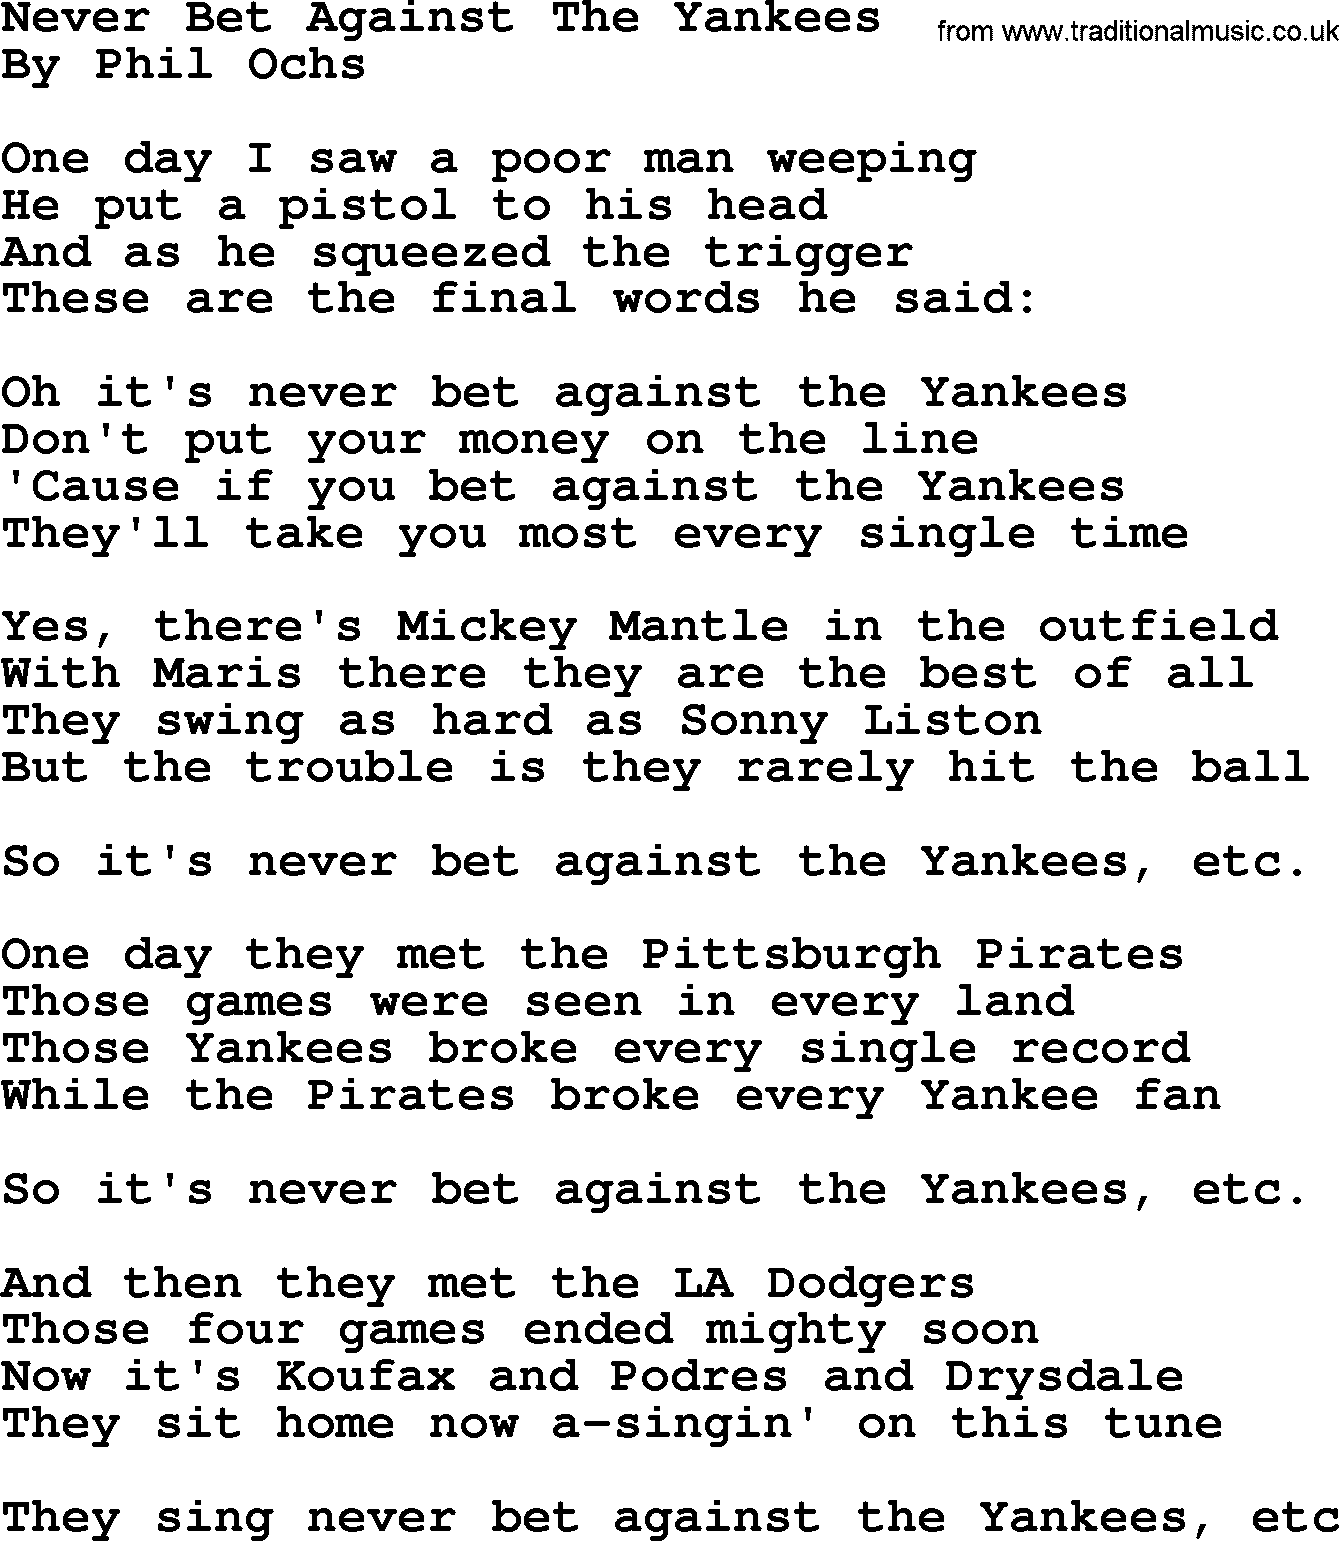 Phil Ochs song Never Bet Against The Yankees, lyrics